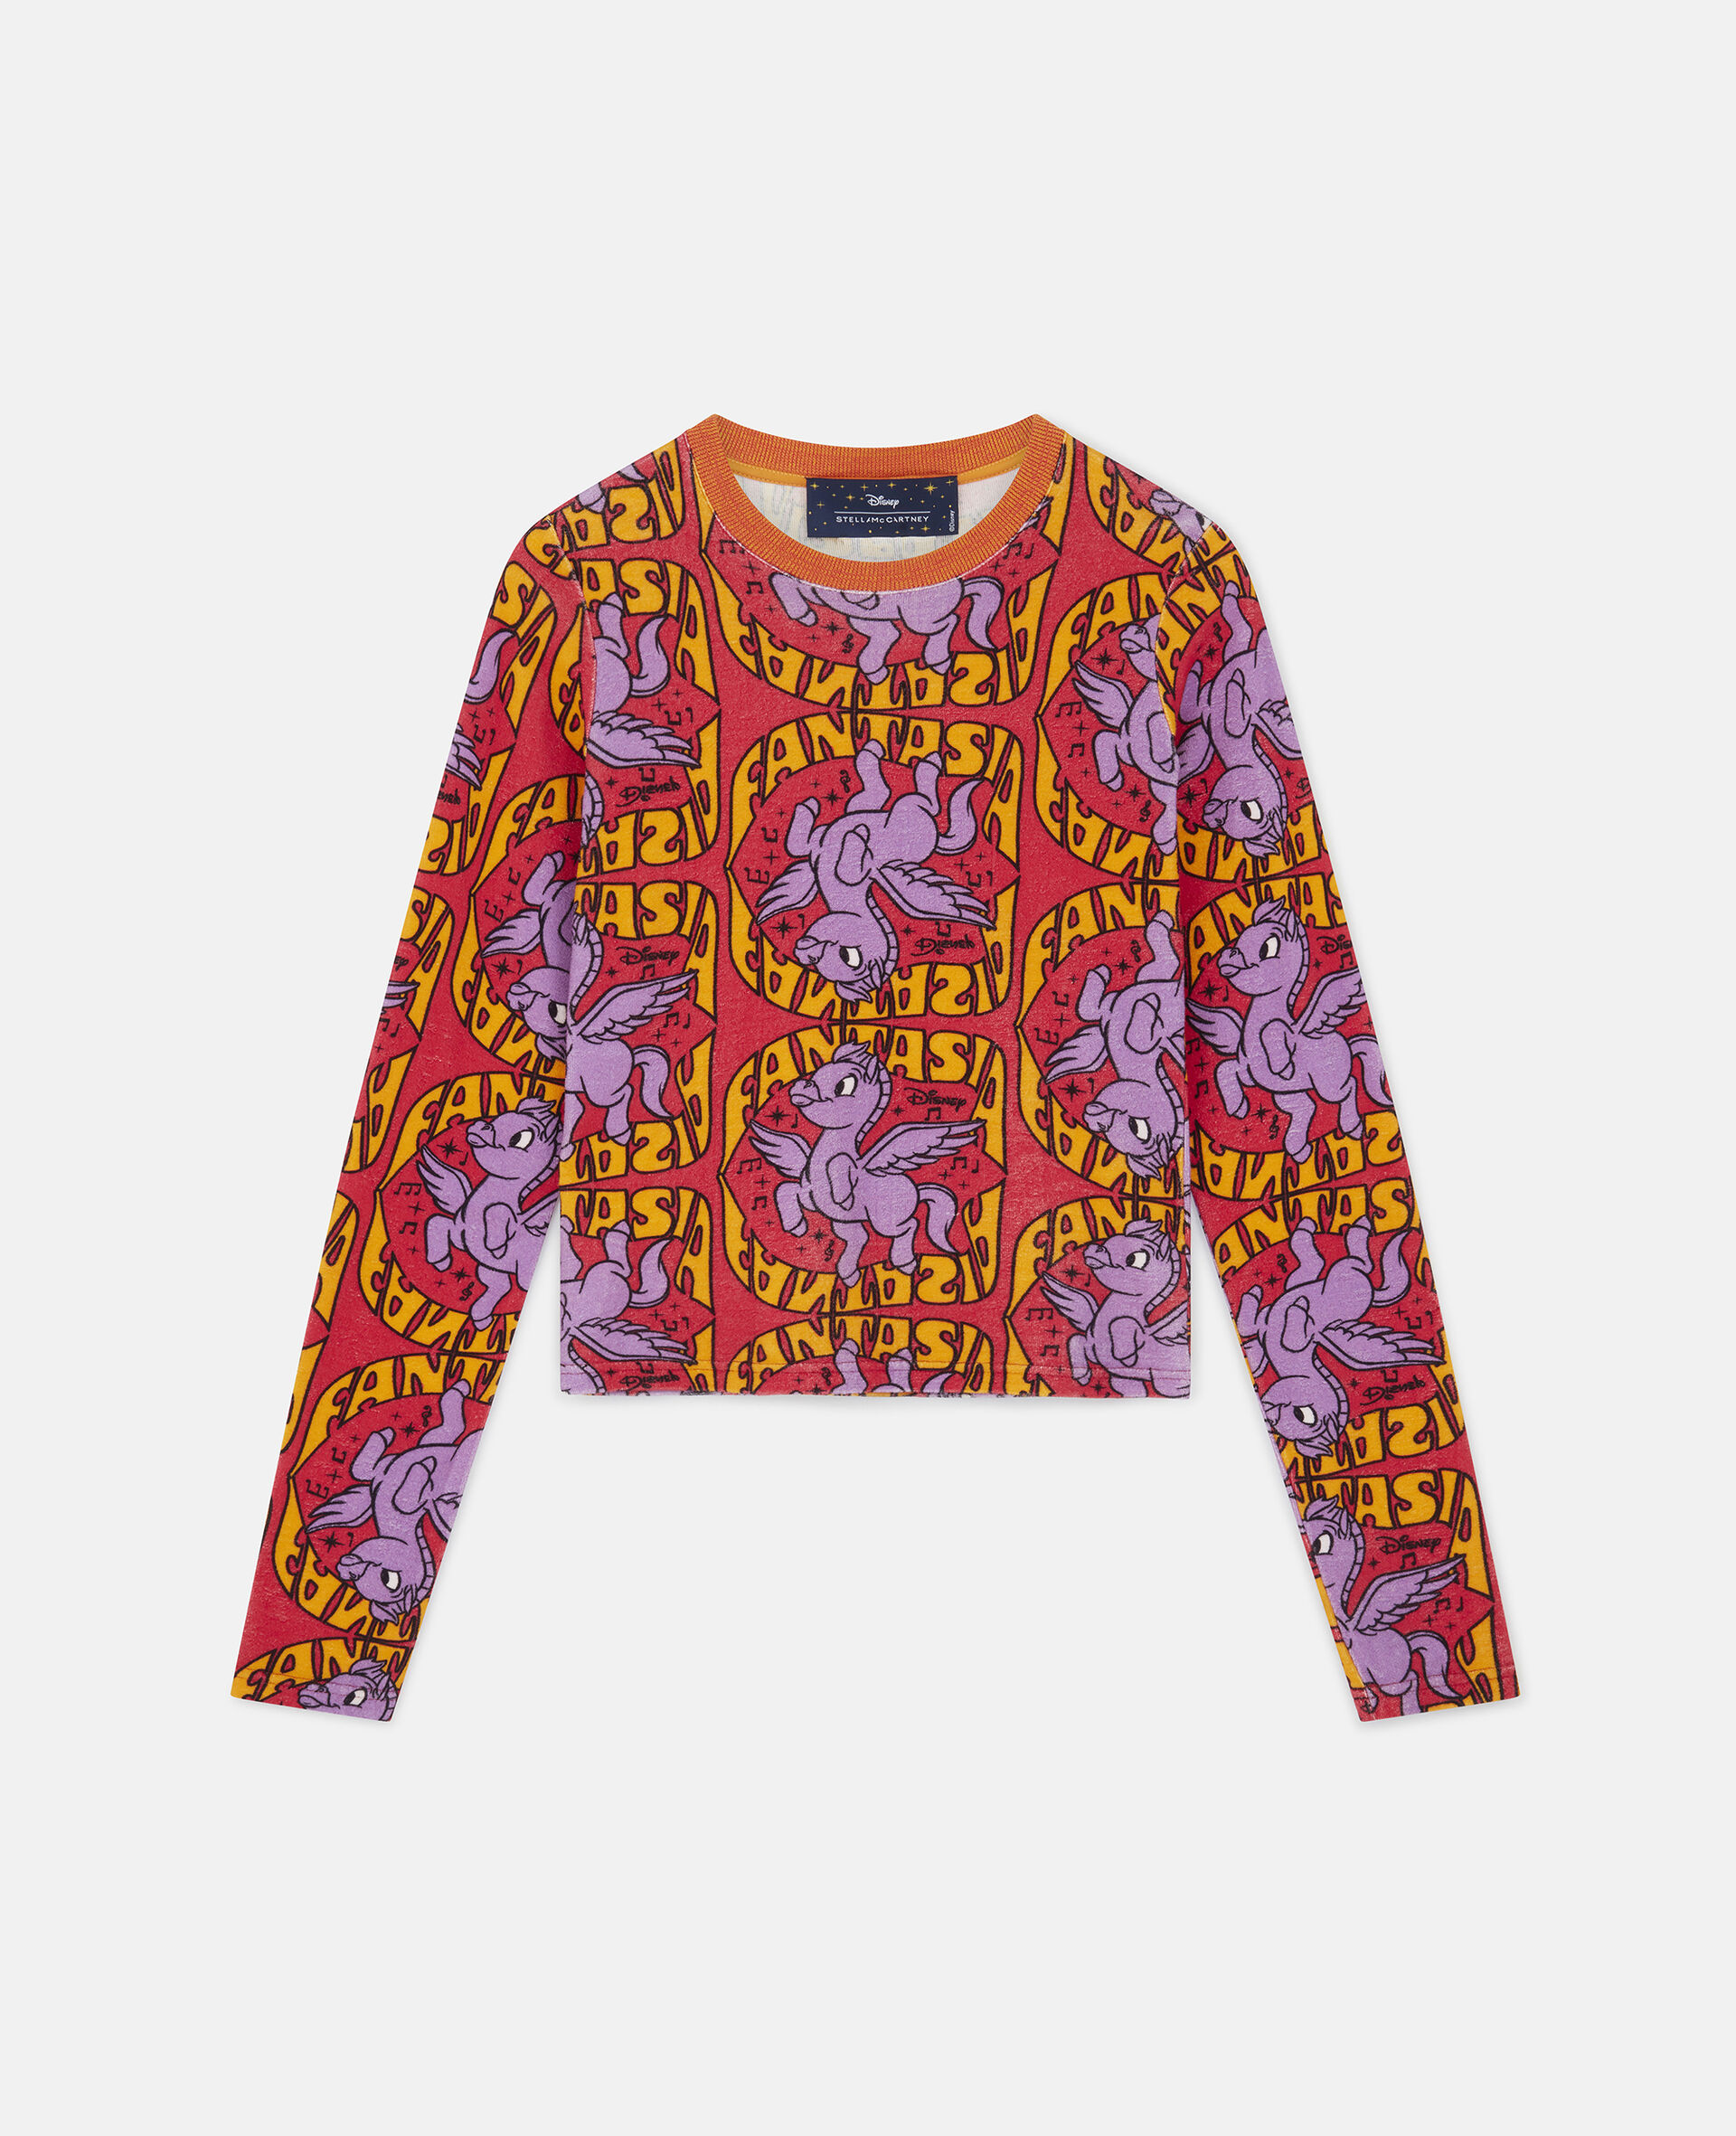 Fantasia Pegasus Print Cotton T-Shirt-Multicoloured-large image number 0